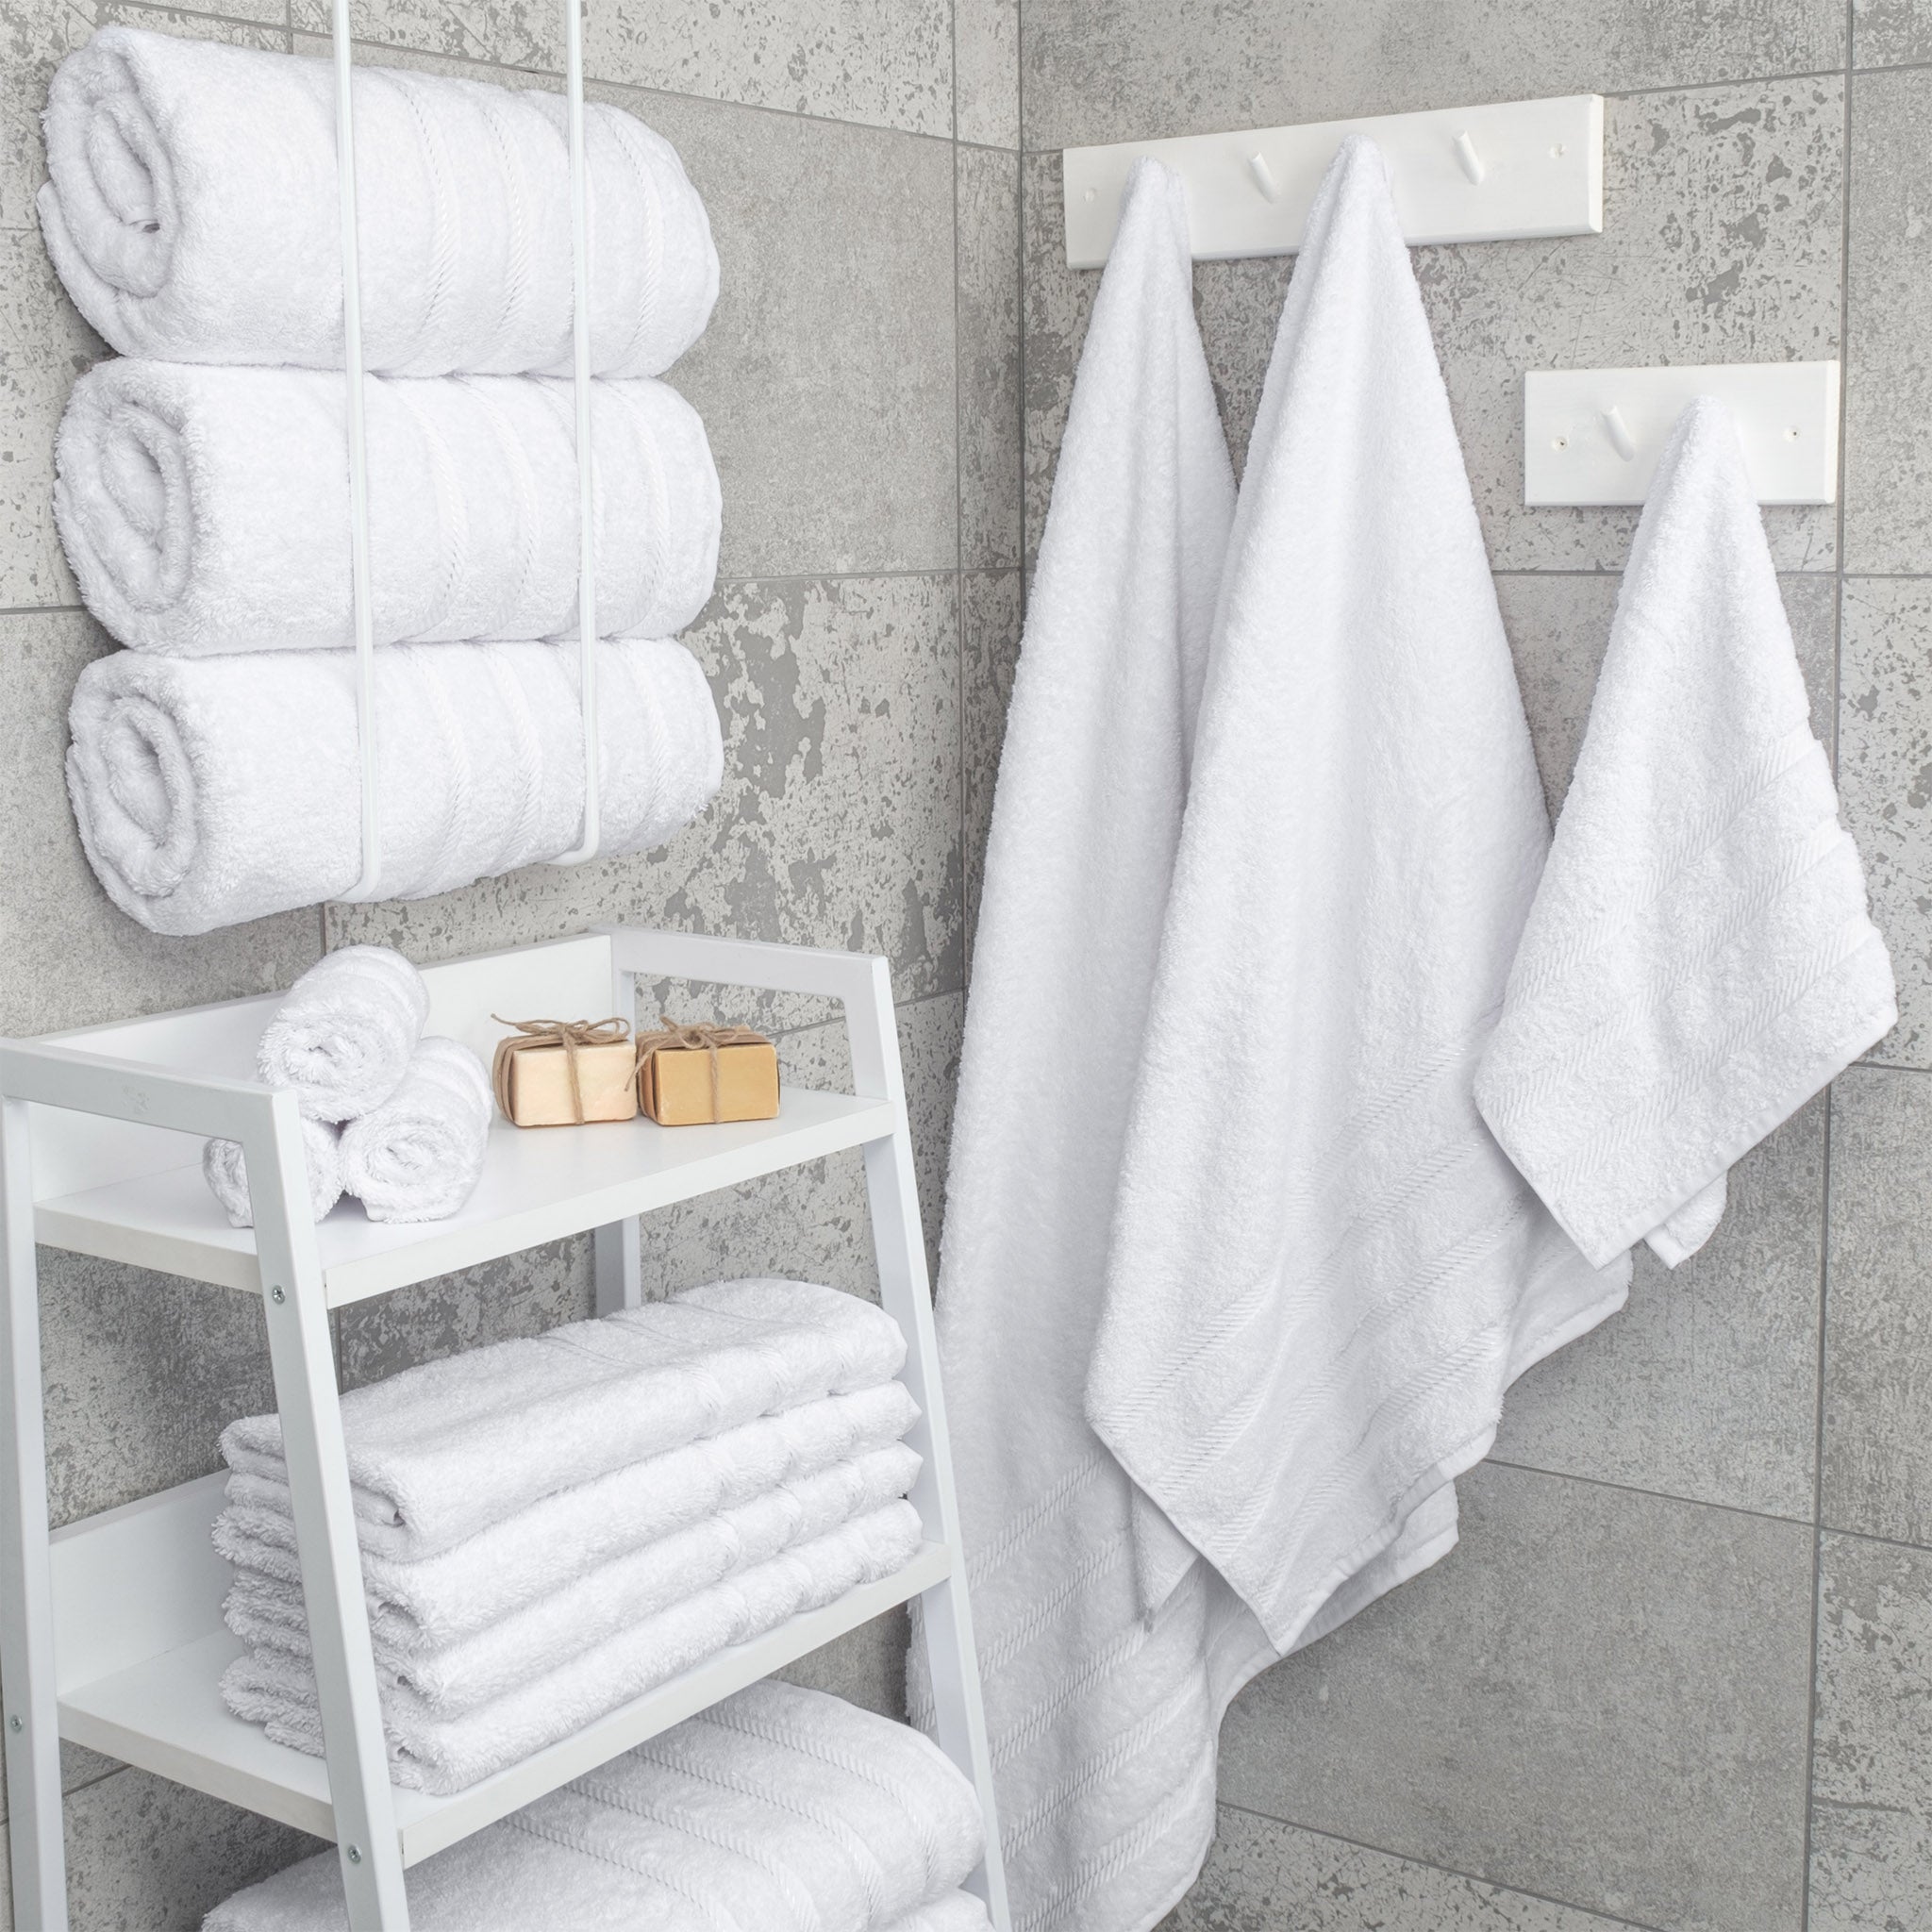 4 Piece 100% Turkish Cotton Best Bath Towel-6 Set Case Pack